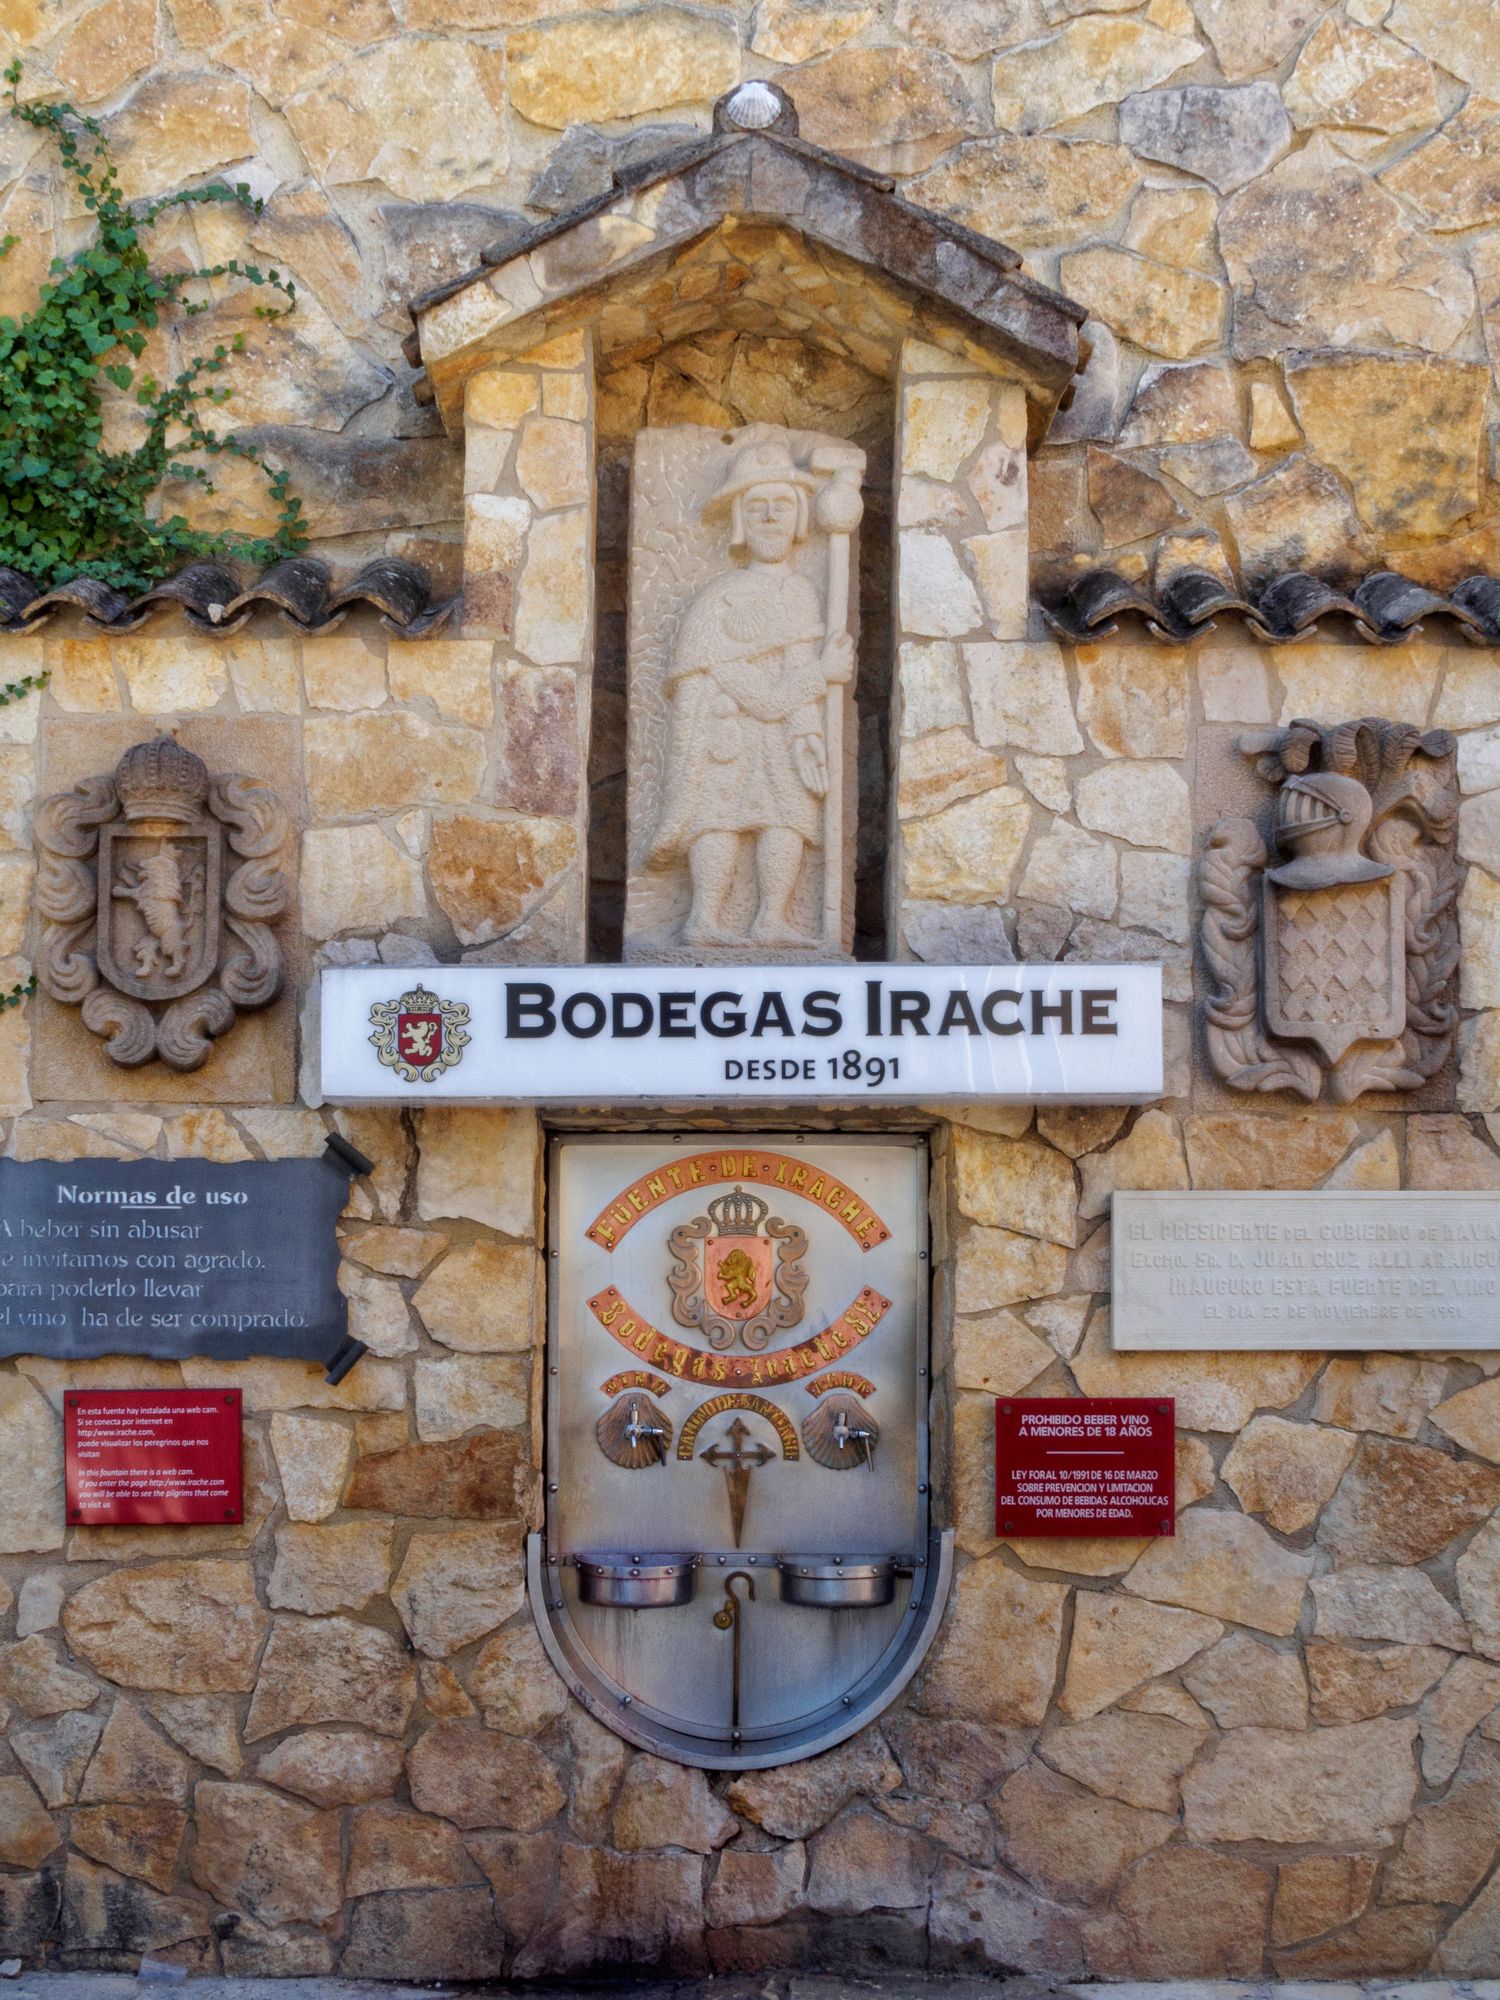 La fuente de Bodegas Irache en la sexta etapa del Camino Francés